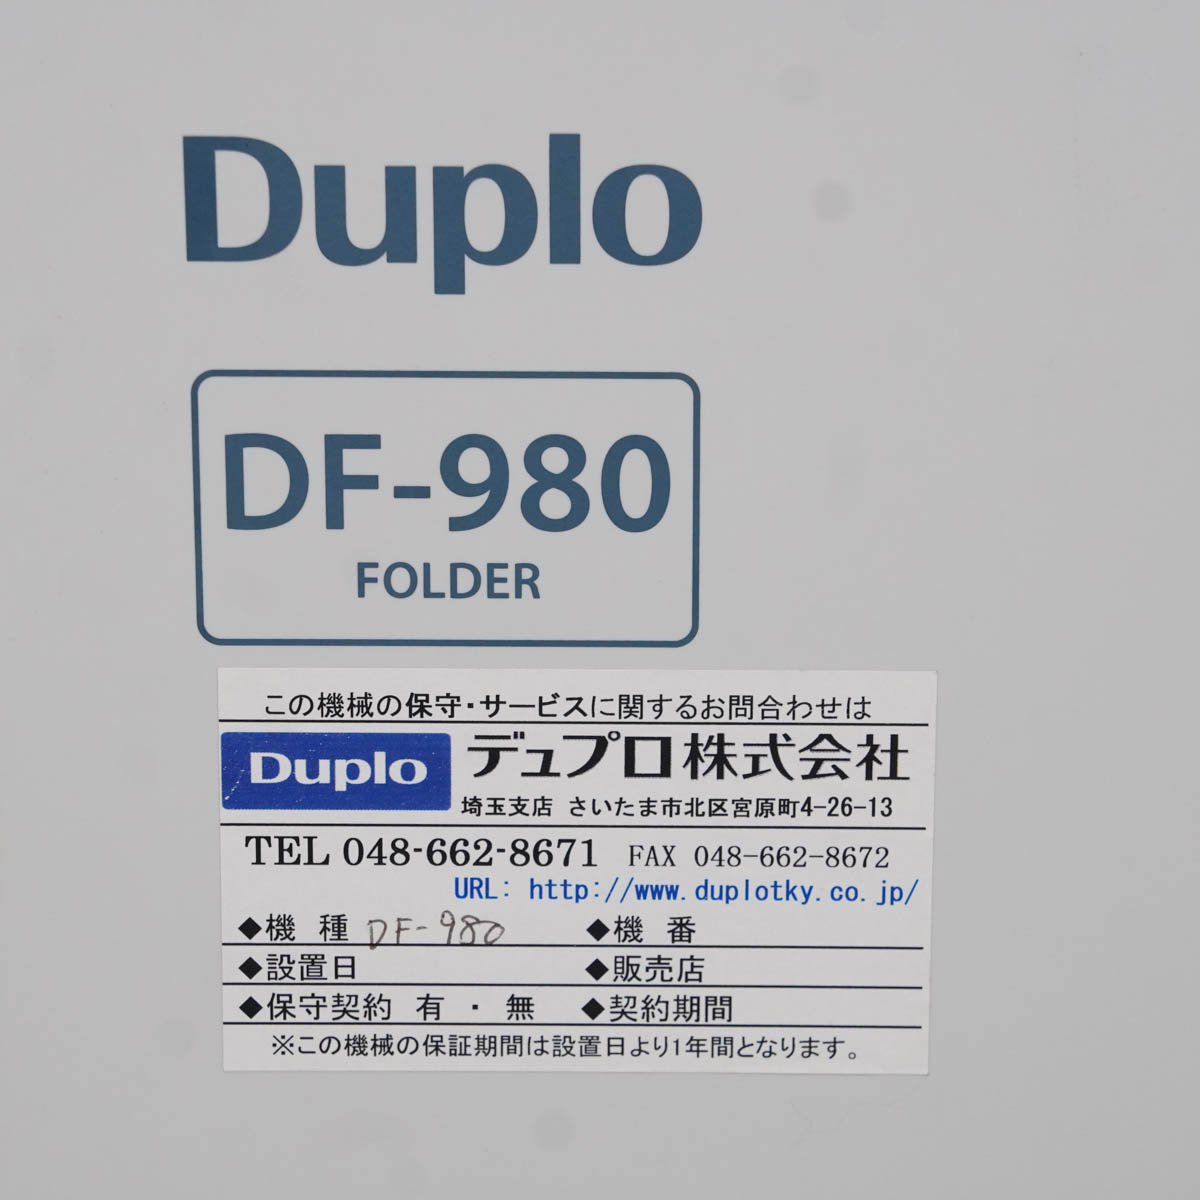 PG]USED 8日保証 動作確認済 Duplo DF-980 フルオート紙折機 全自動 フォルダー FOLDER 電源コード [04733-0054]  その他 中古販売分析機器計測器総合商社ディルウィングス